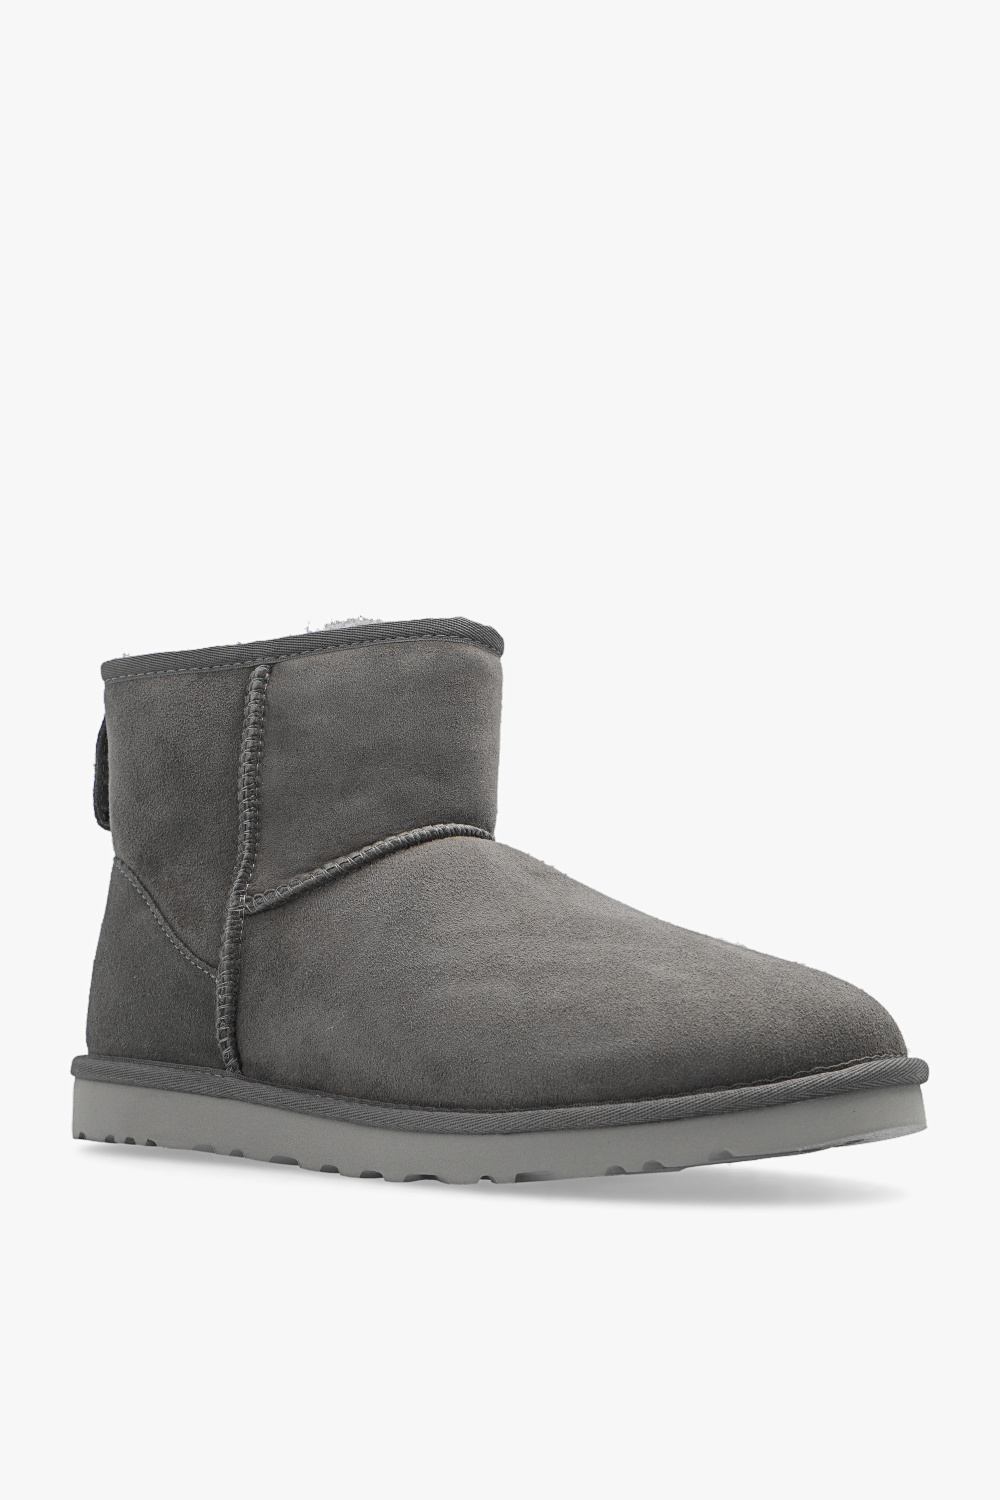 ugg bling ‘Classic Mini’ snow boots